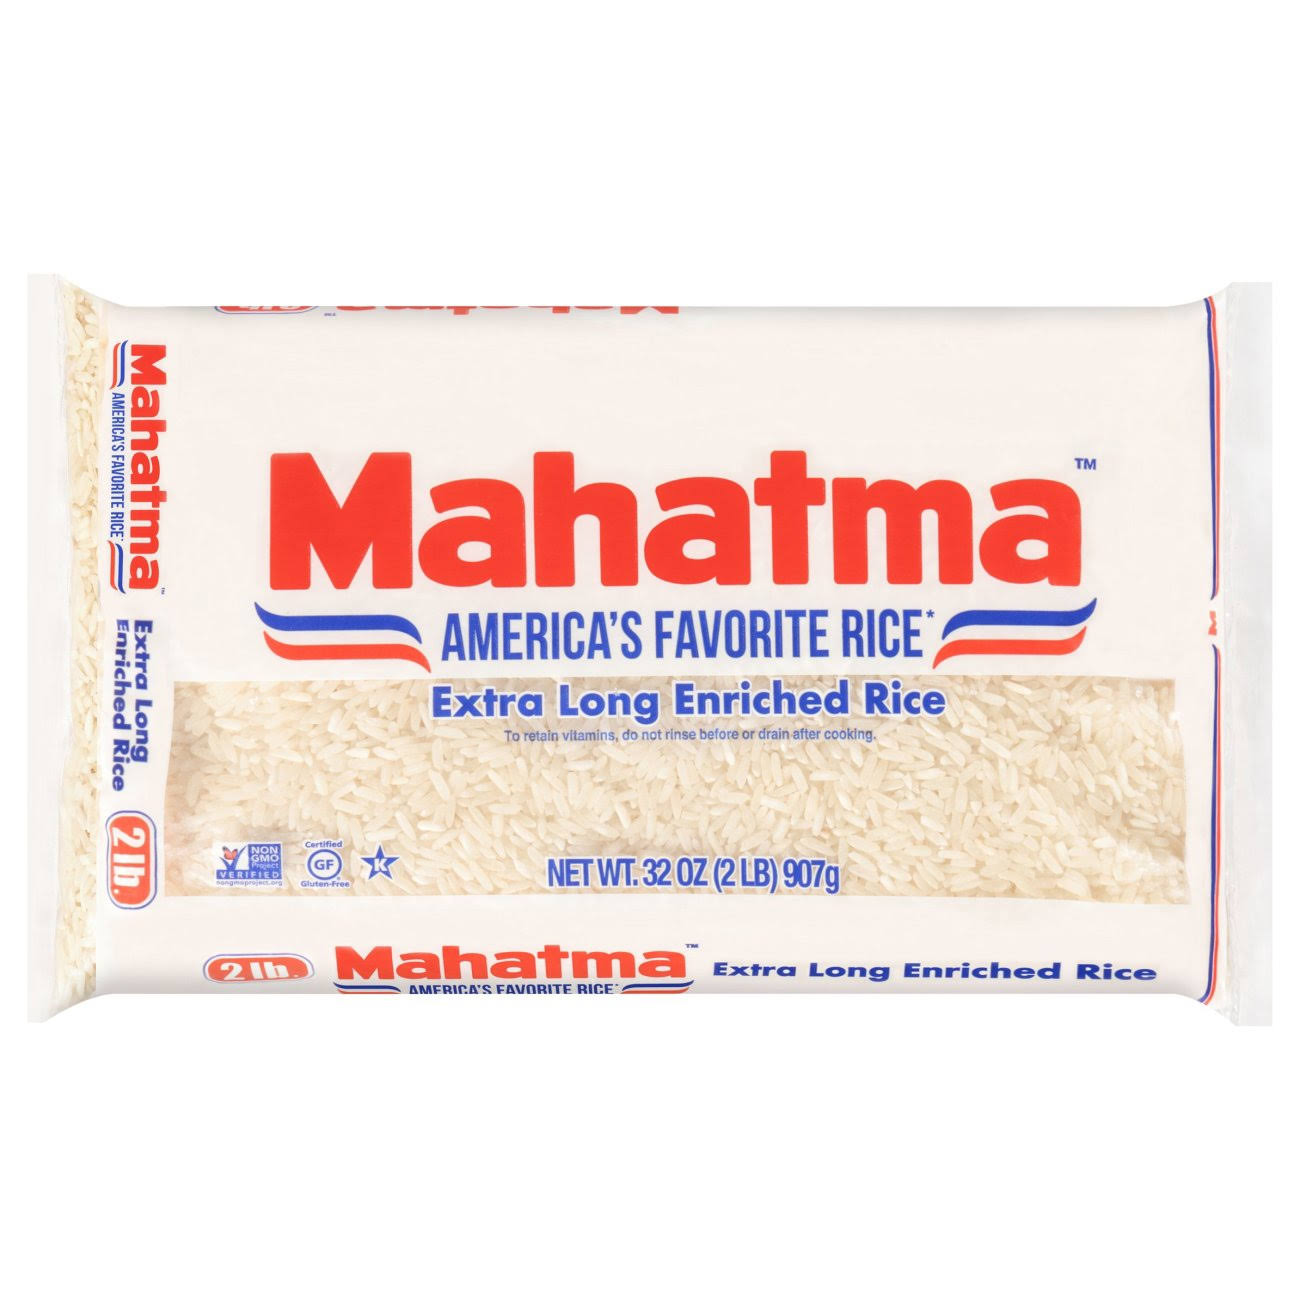 Mahatma Extra Long Grain Enriched Rice - 2lbs